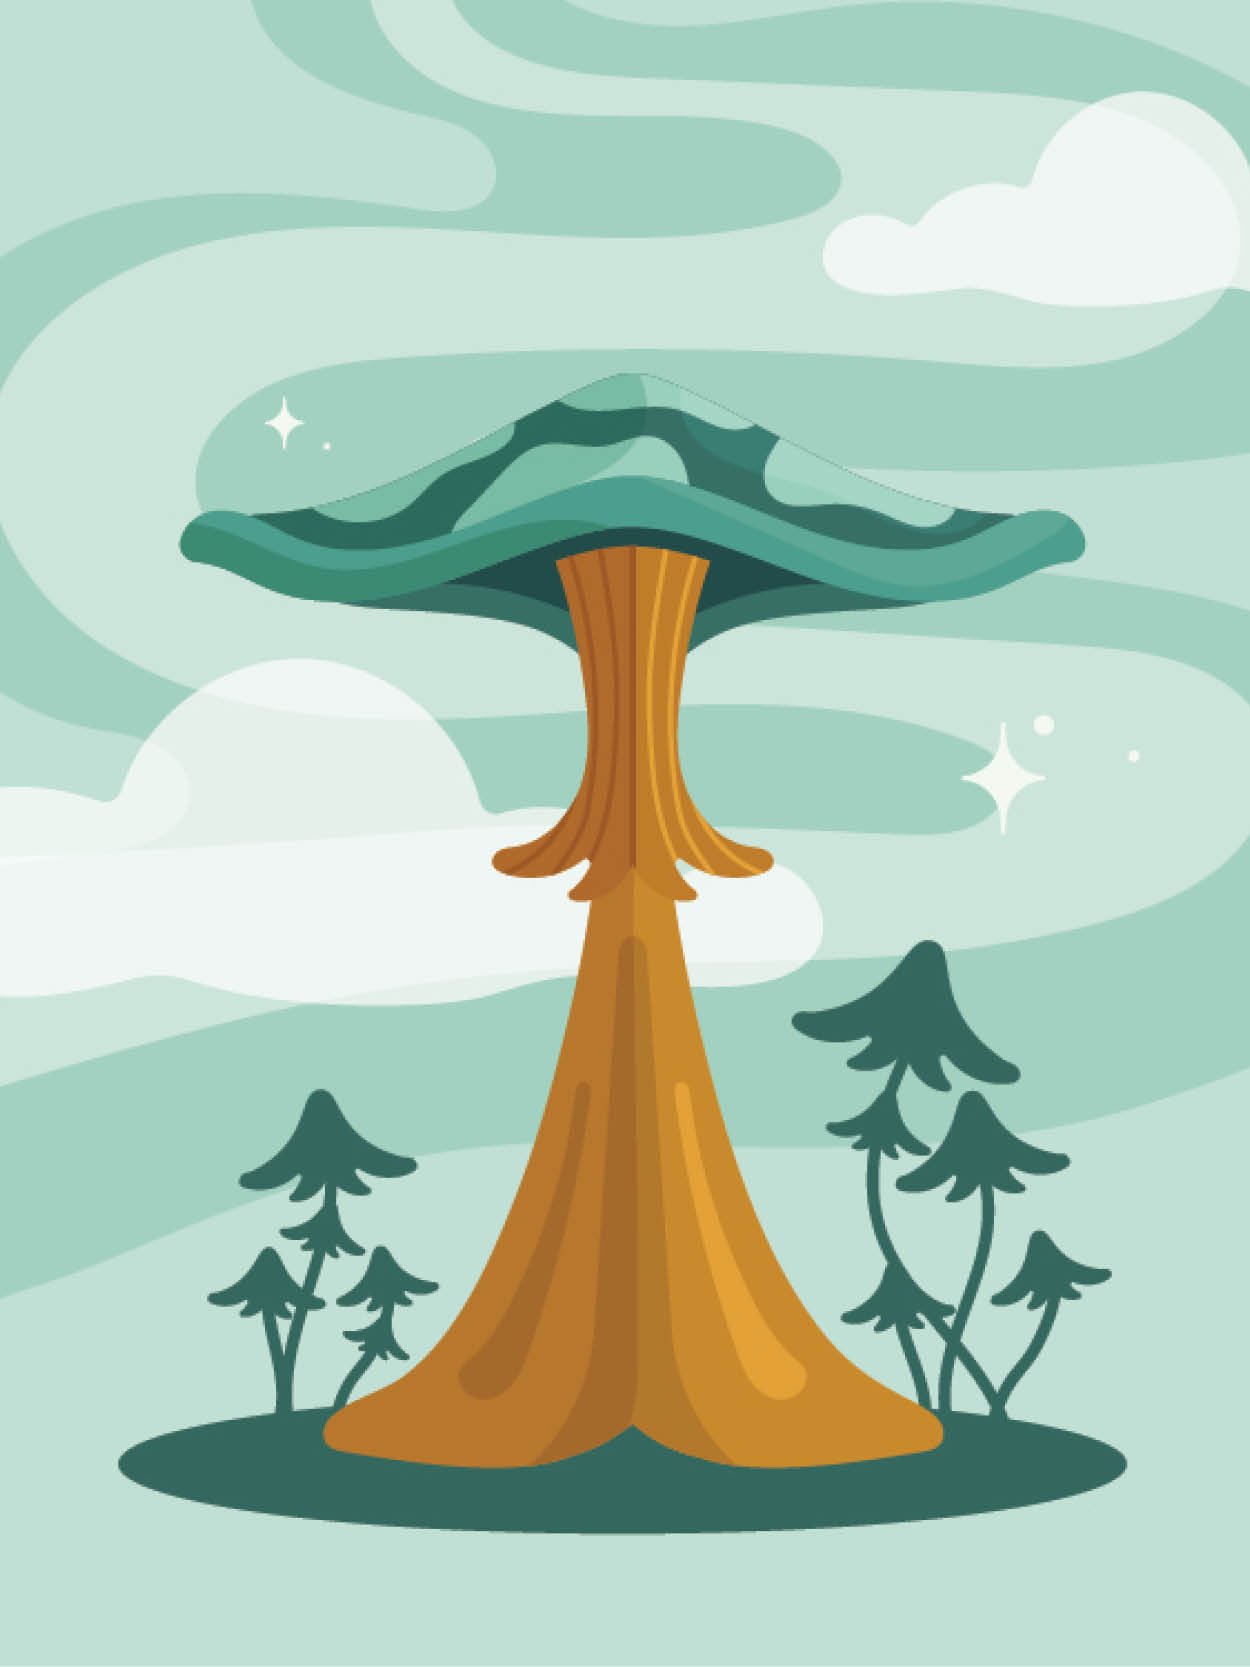 Whimsical-Mushroom-Sci-Fi-Fantasy-Illustration-by-Amanda-Weedmark.jpg